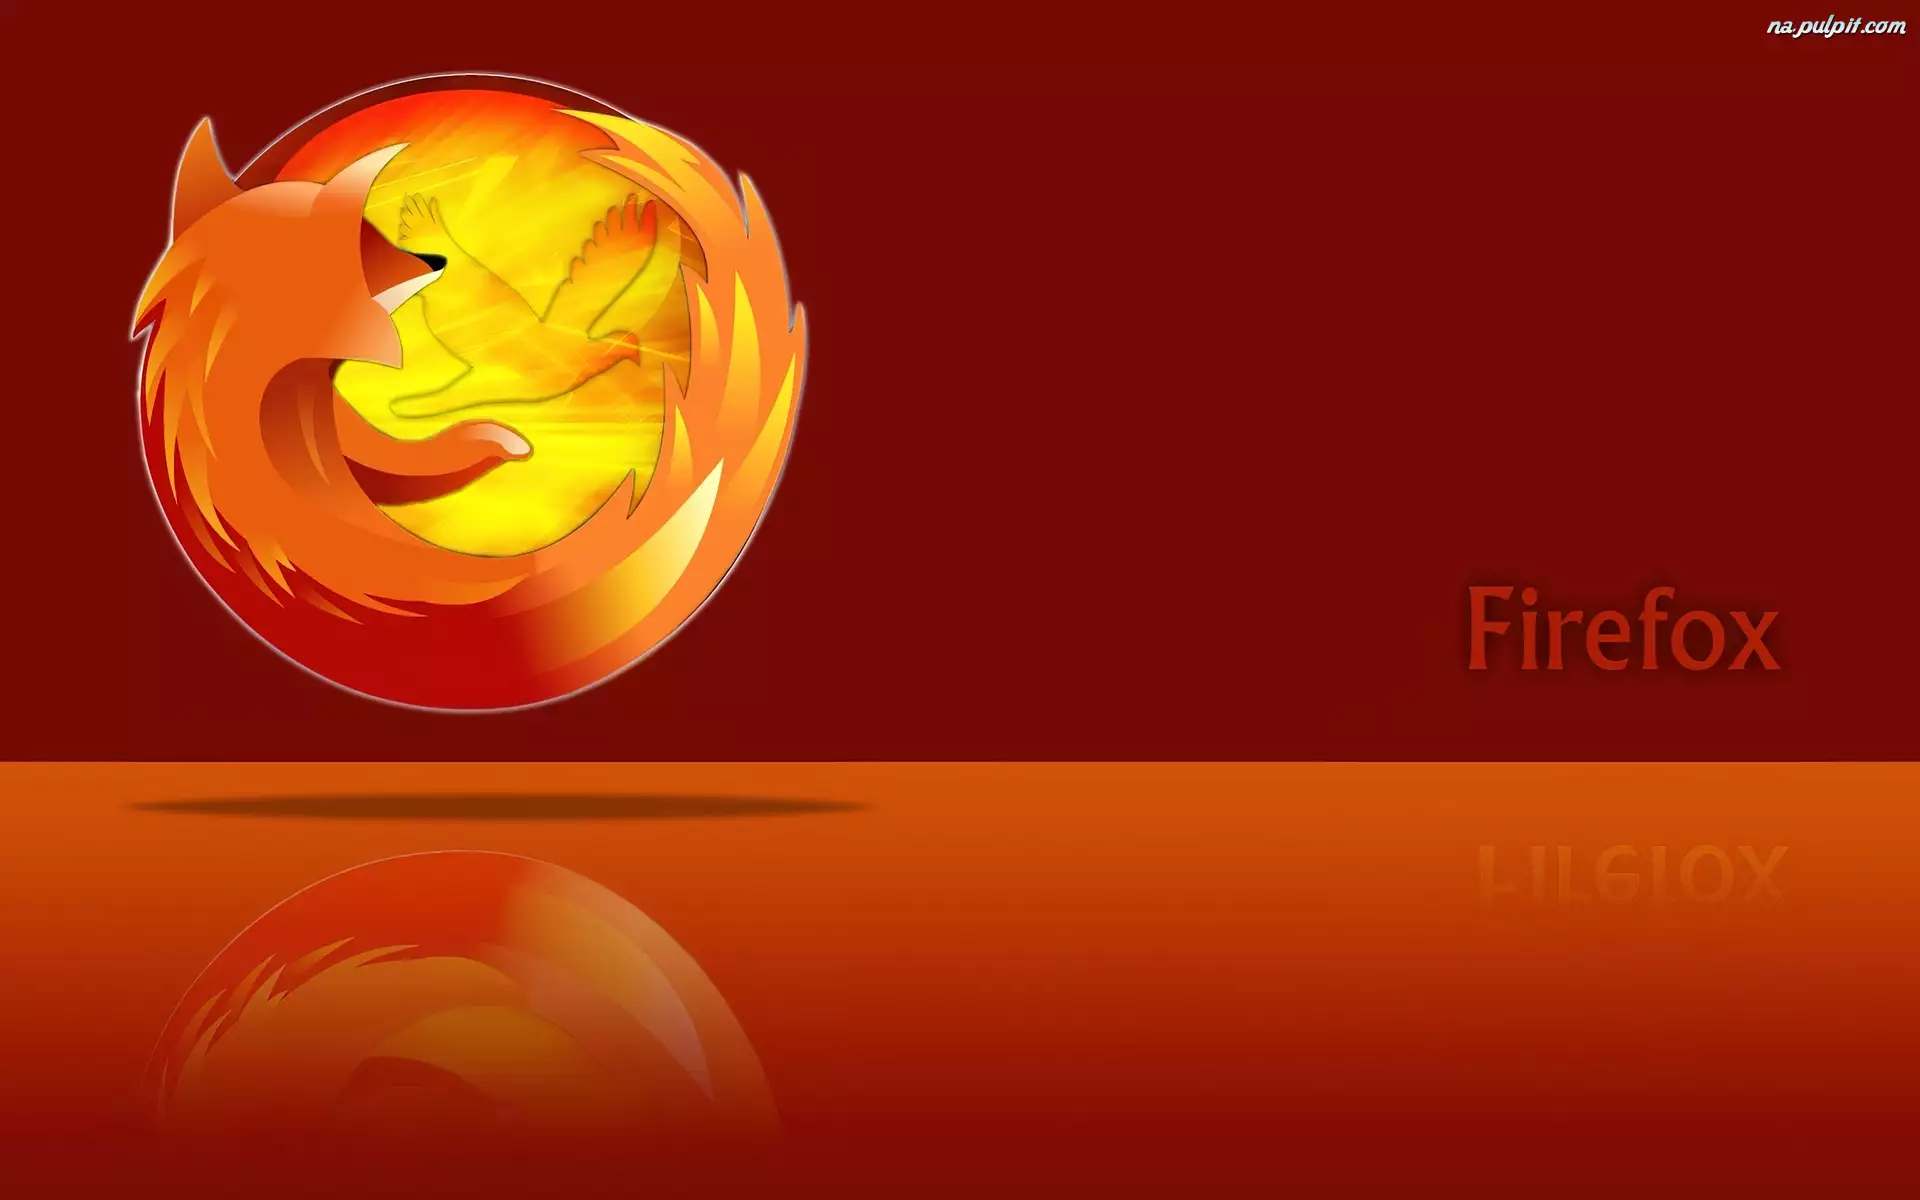 firefox developer edition logo